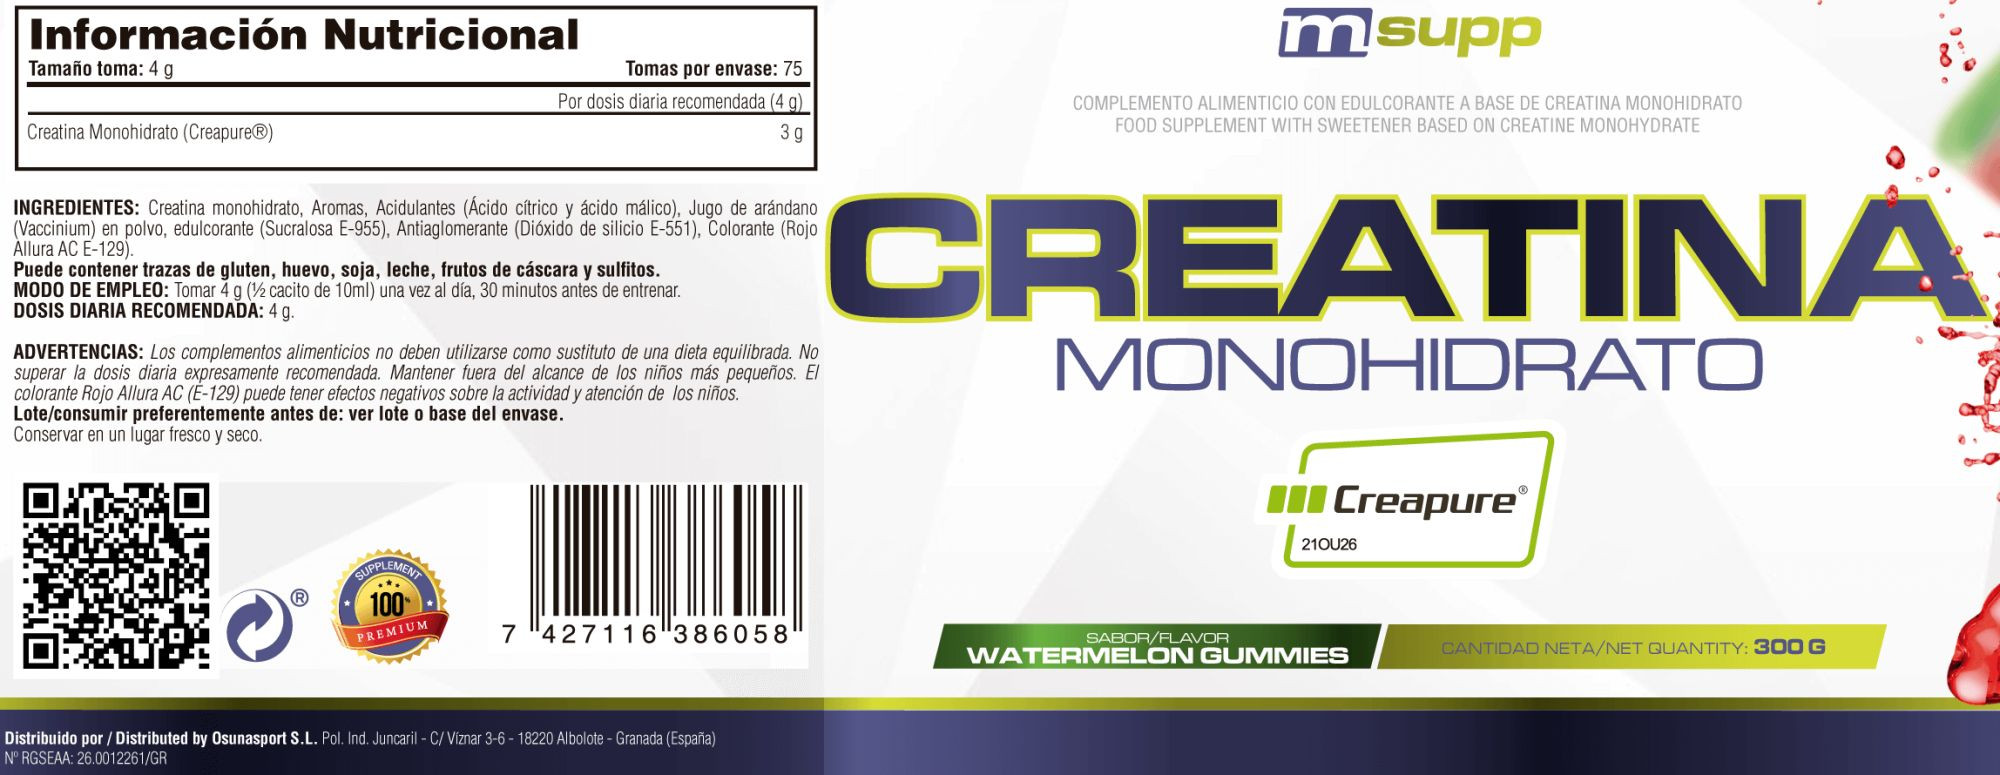 Creatina (Creapure®) - 300g De Mm Supplements Sabor Sandias De Gominola  MKP